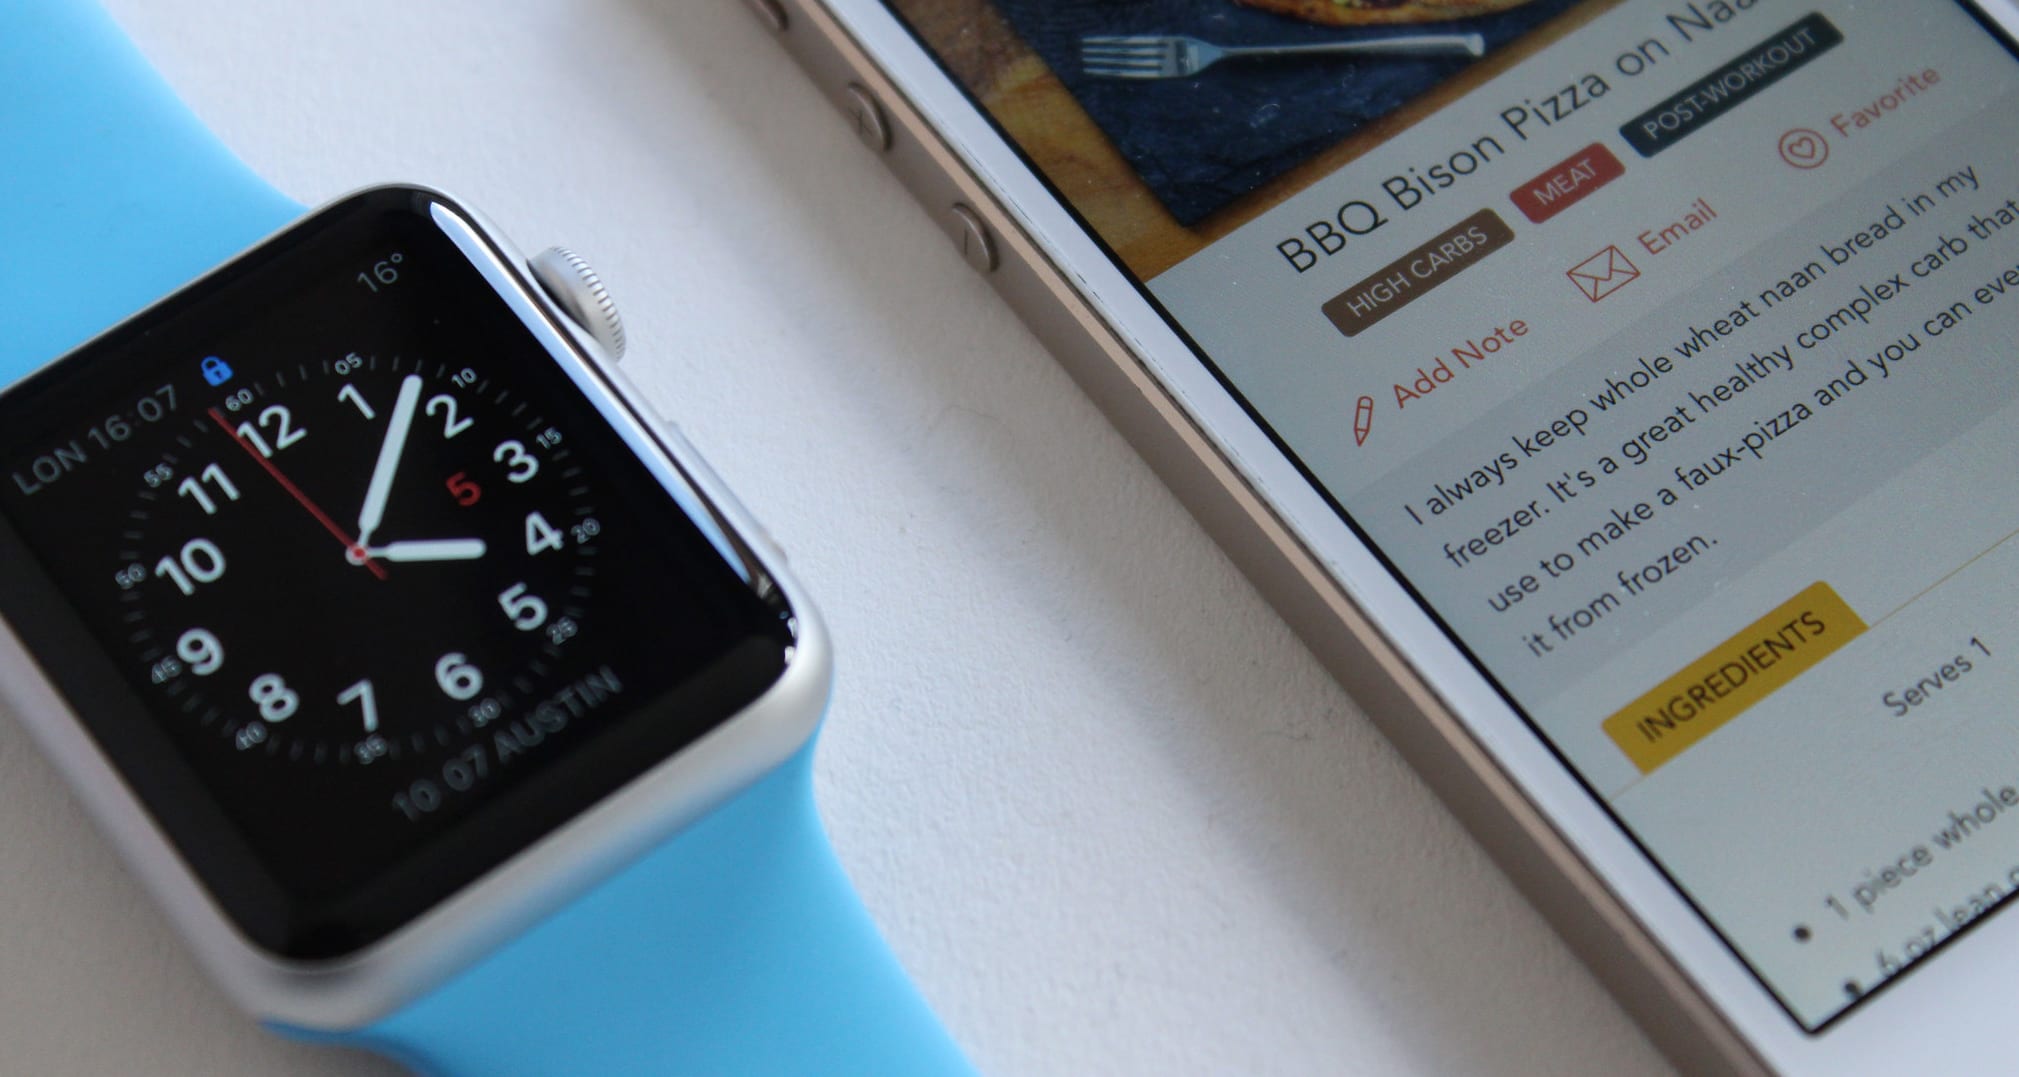 iPhone 6 Plus + Apple Watch: A Field Service Dynamic Duo?